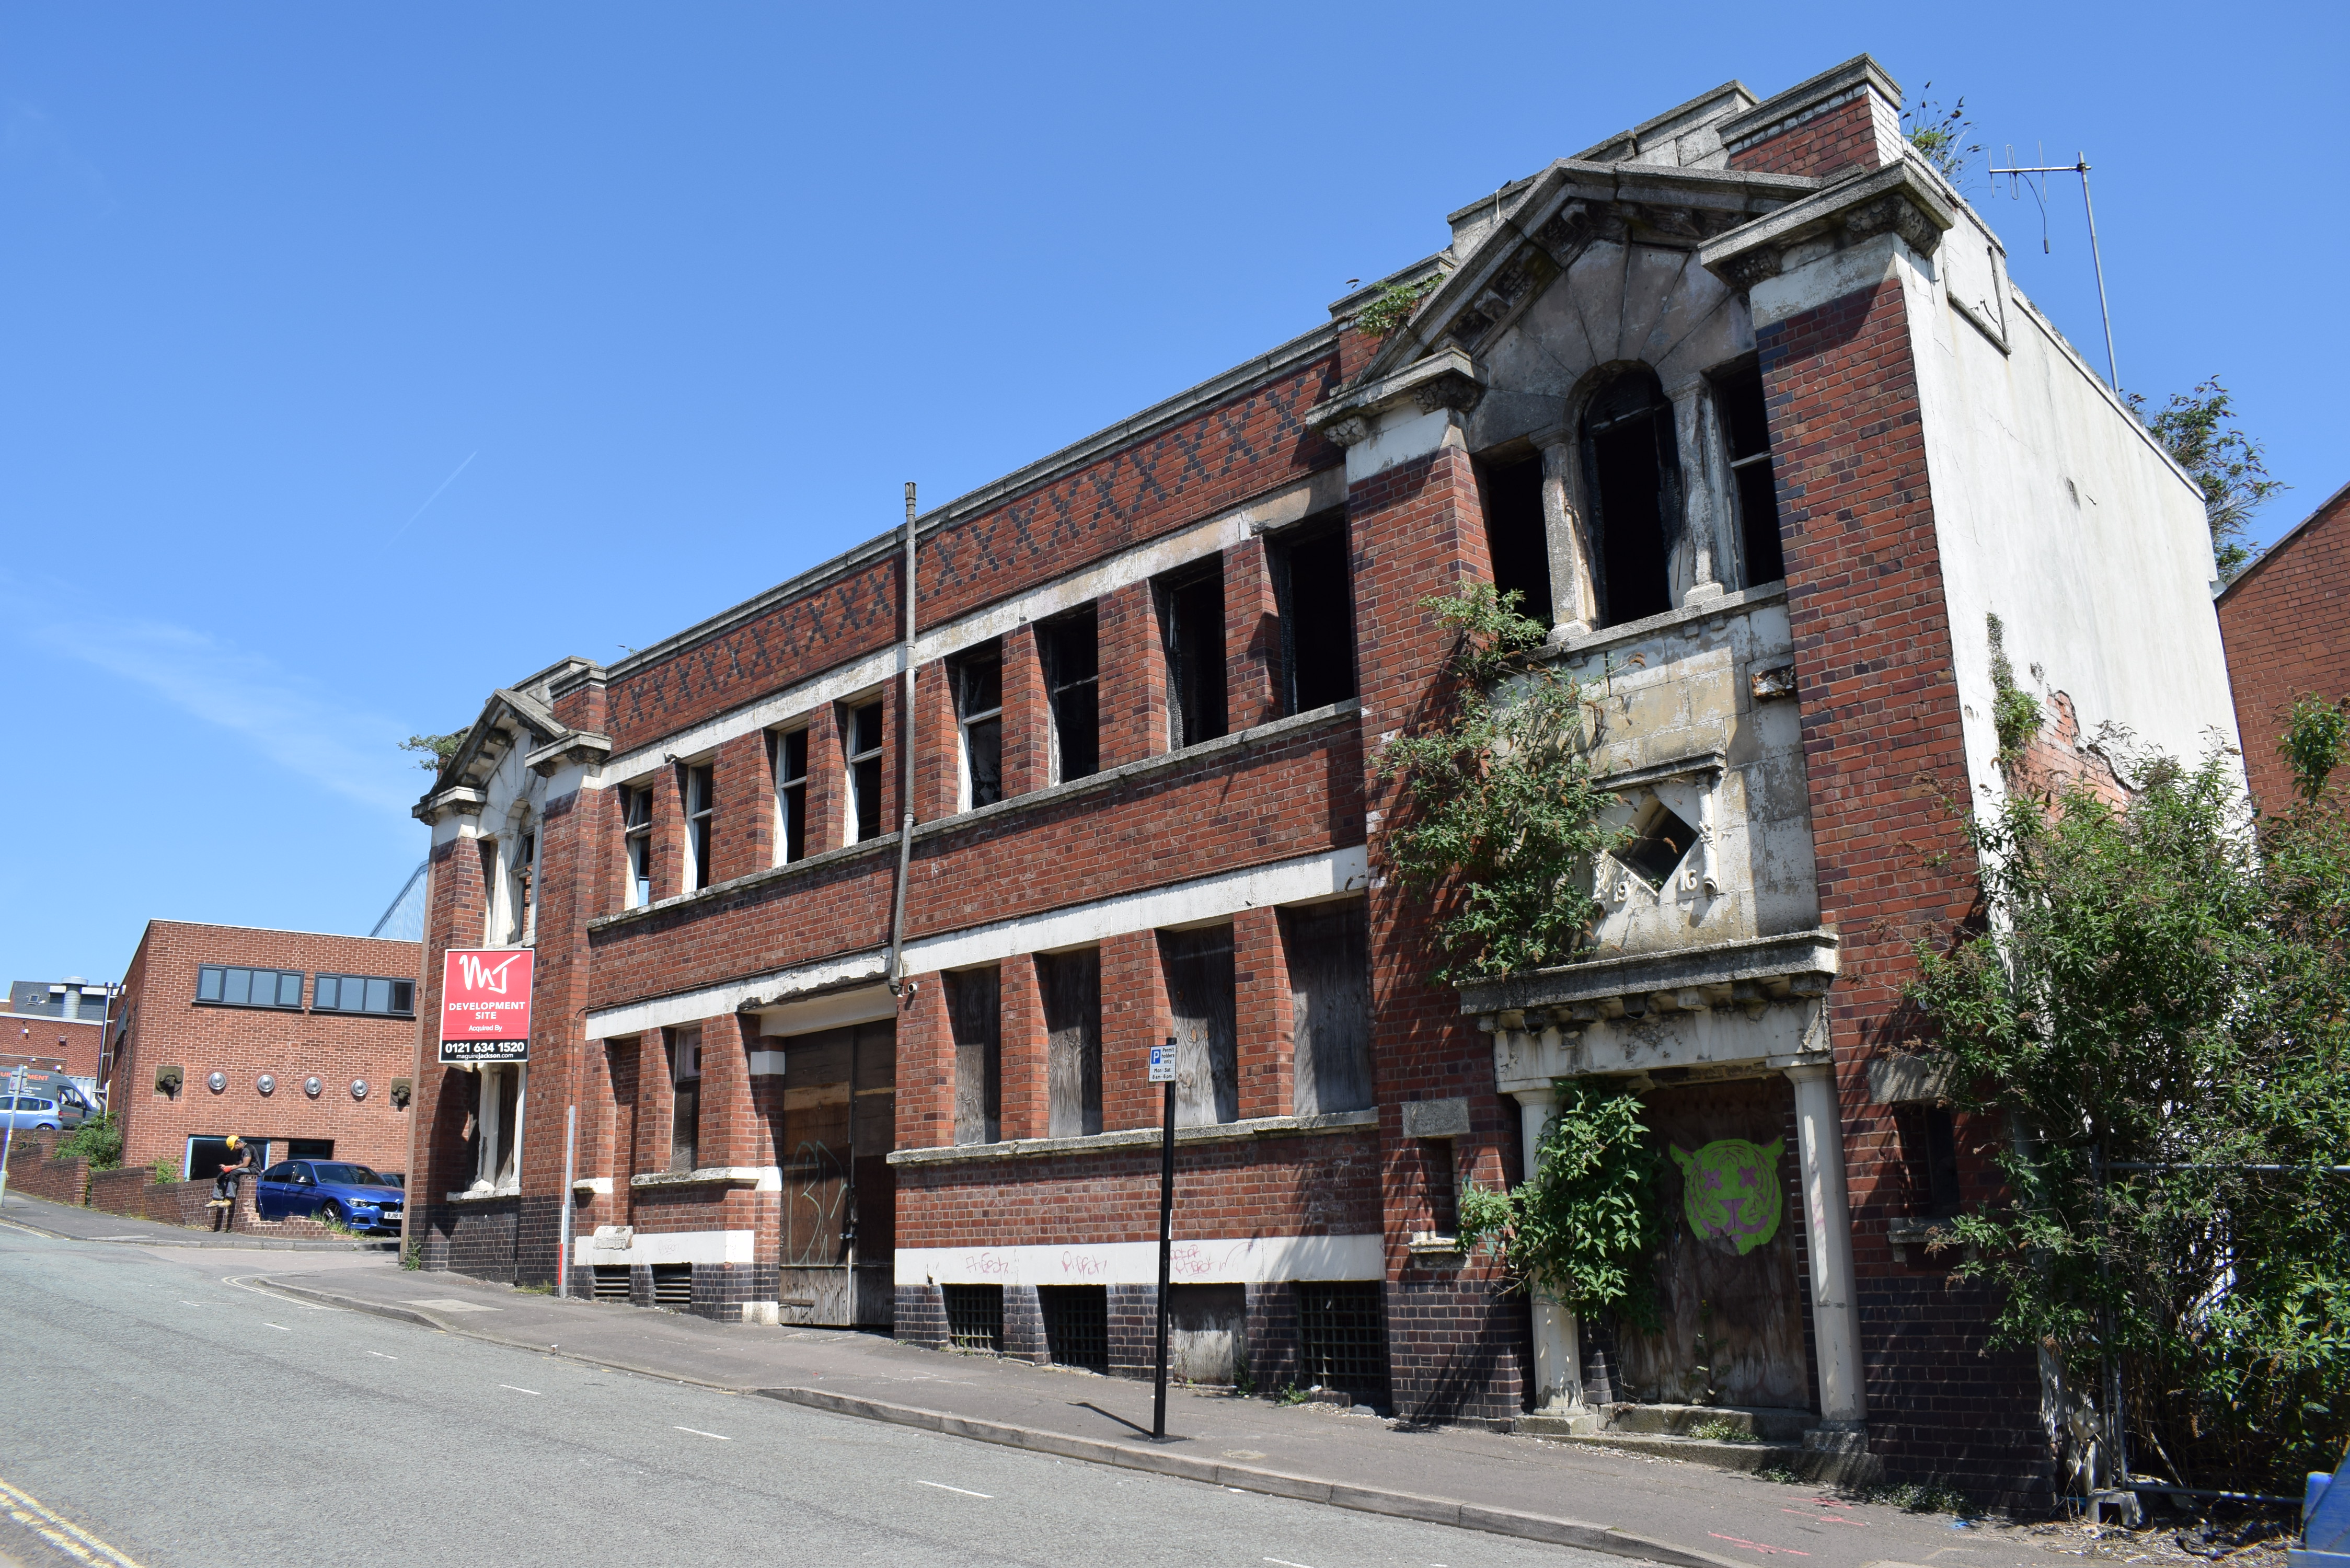 Incorporating Built Heritage into Birmingham’s City Centre Developments